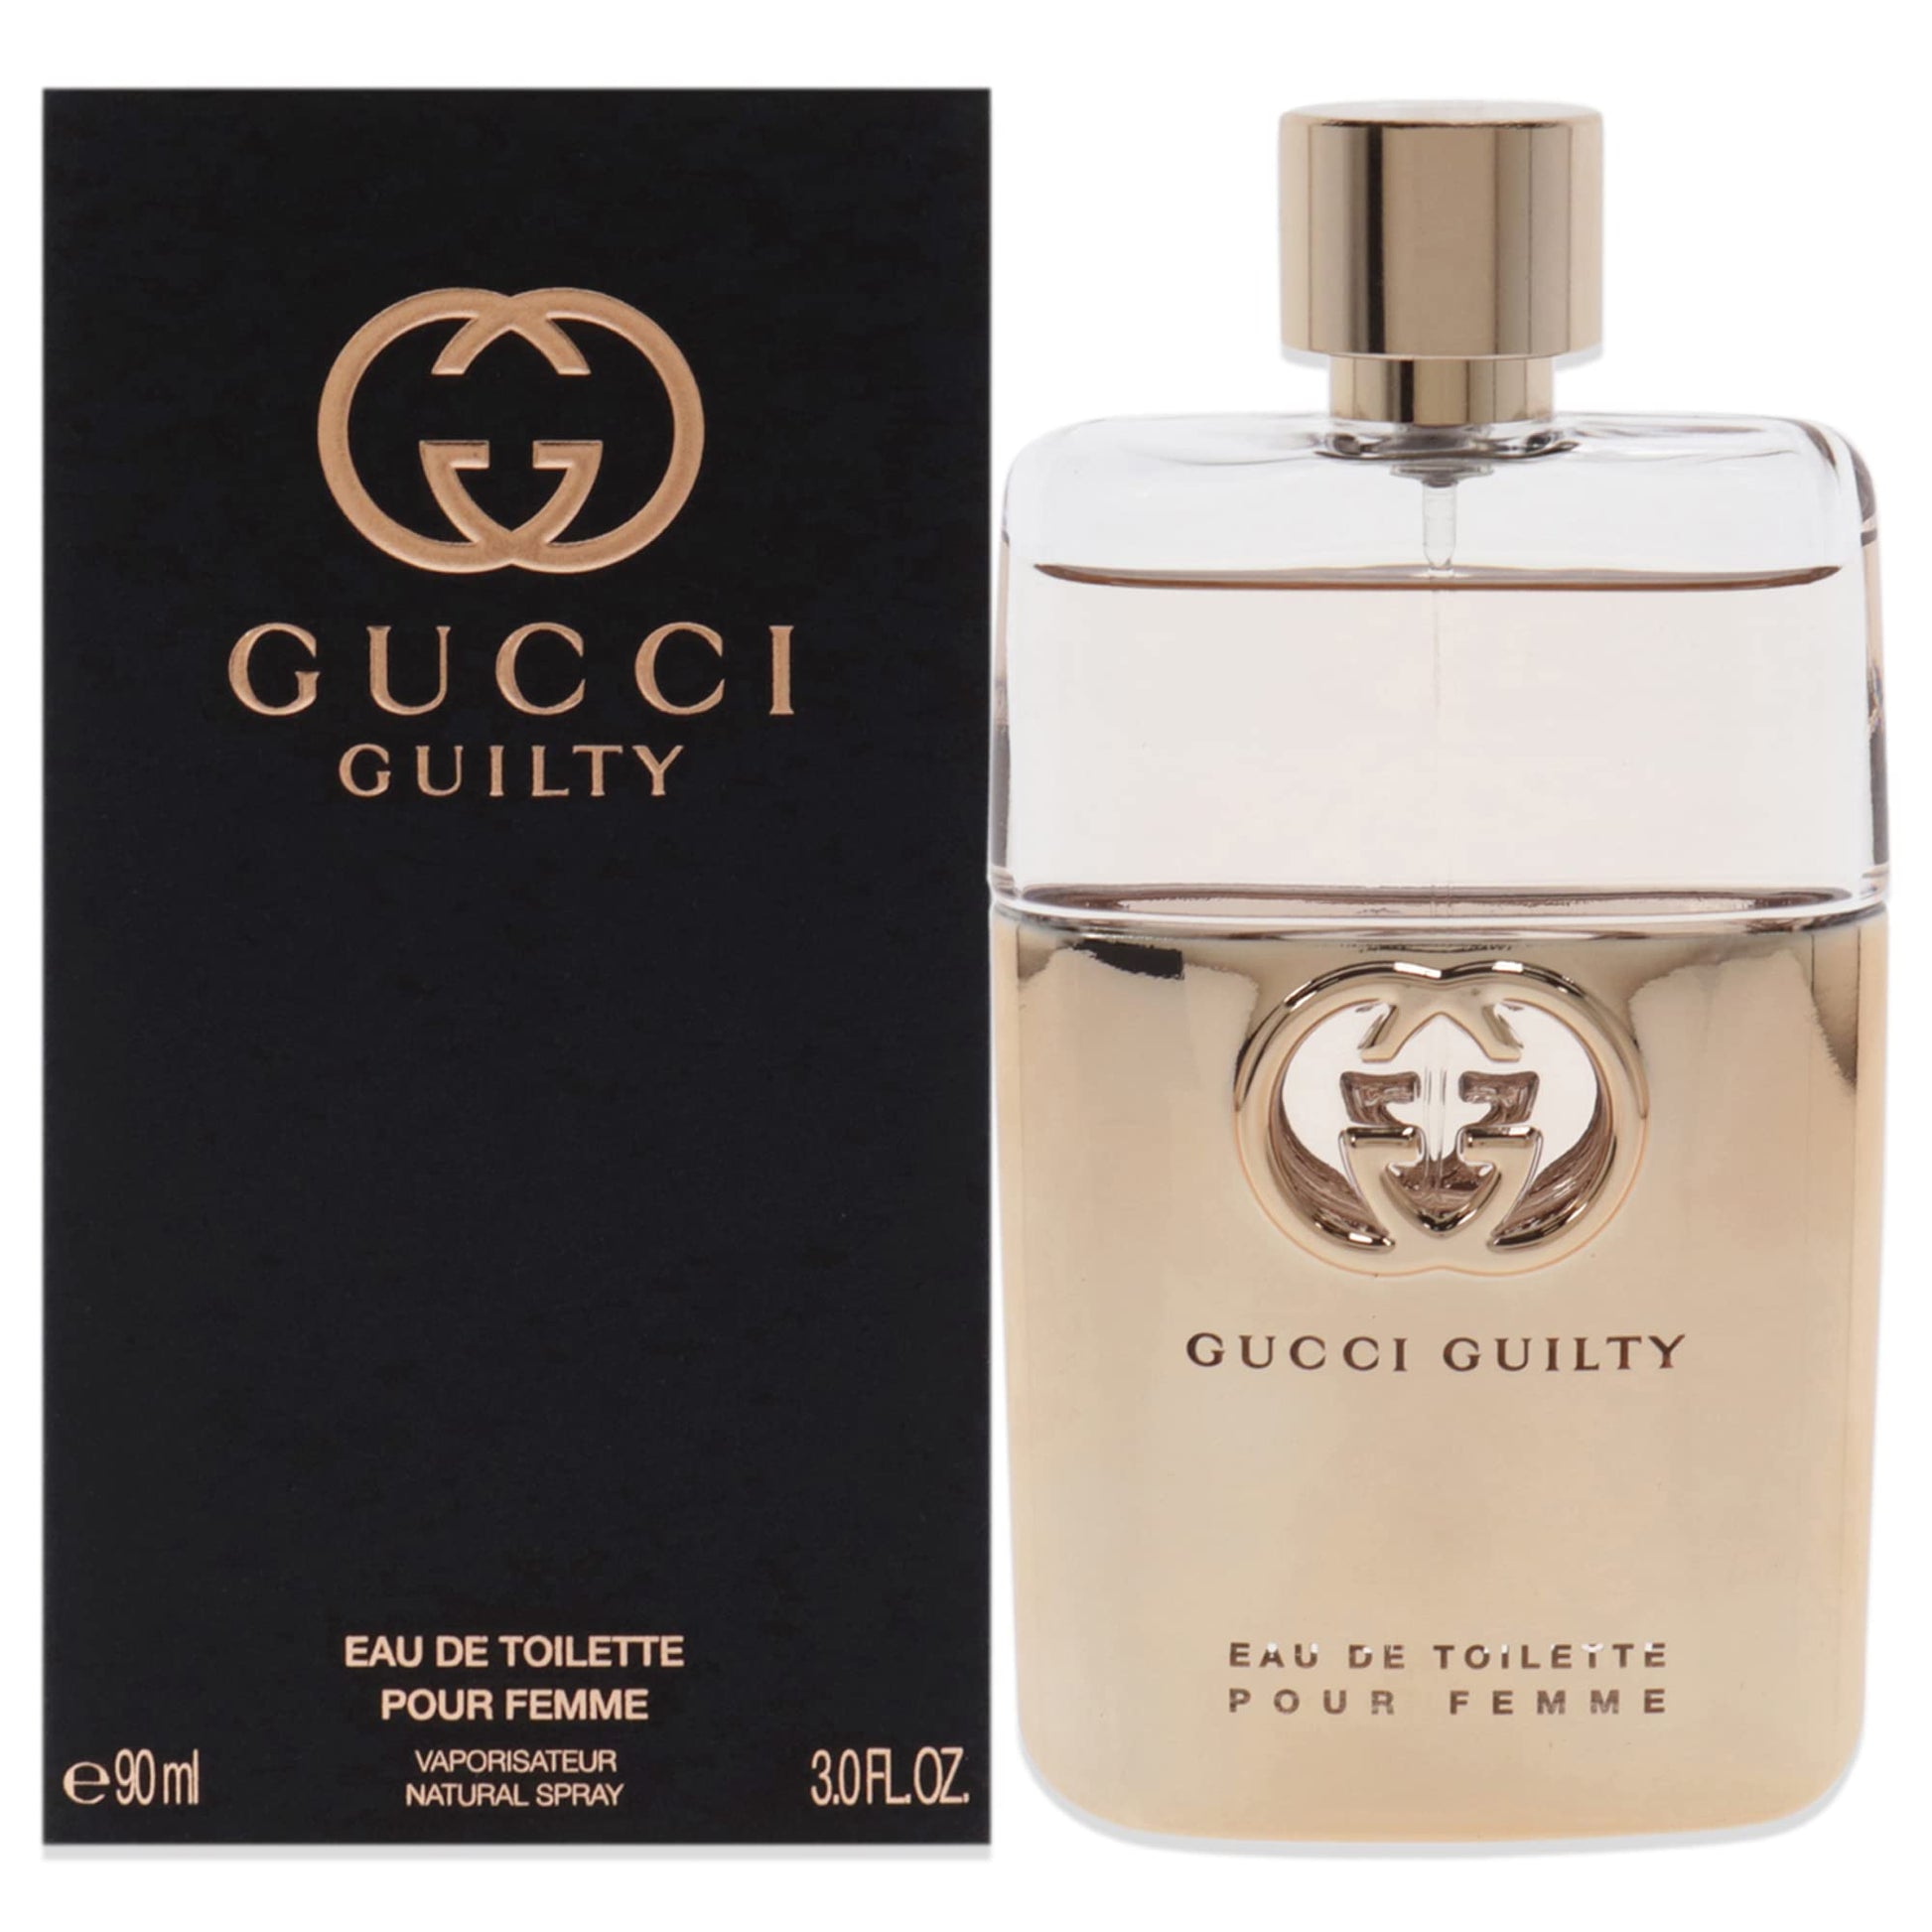 Guilty Eau de Toilette Spray for Women by Gucci, Product image 1